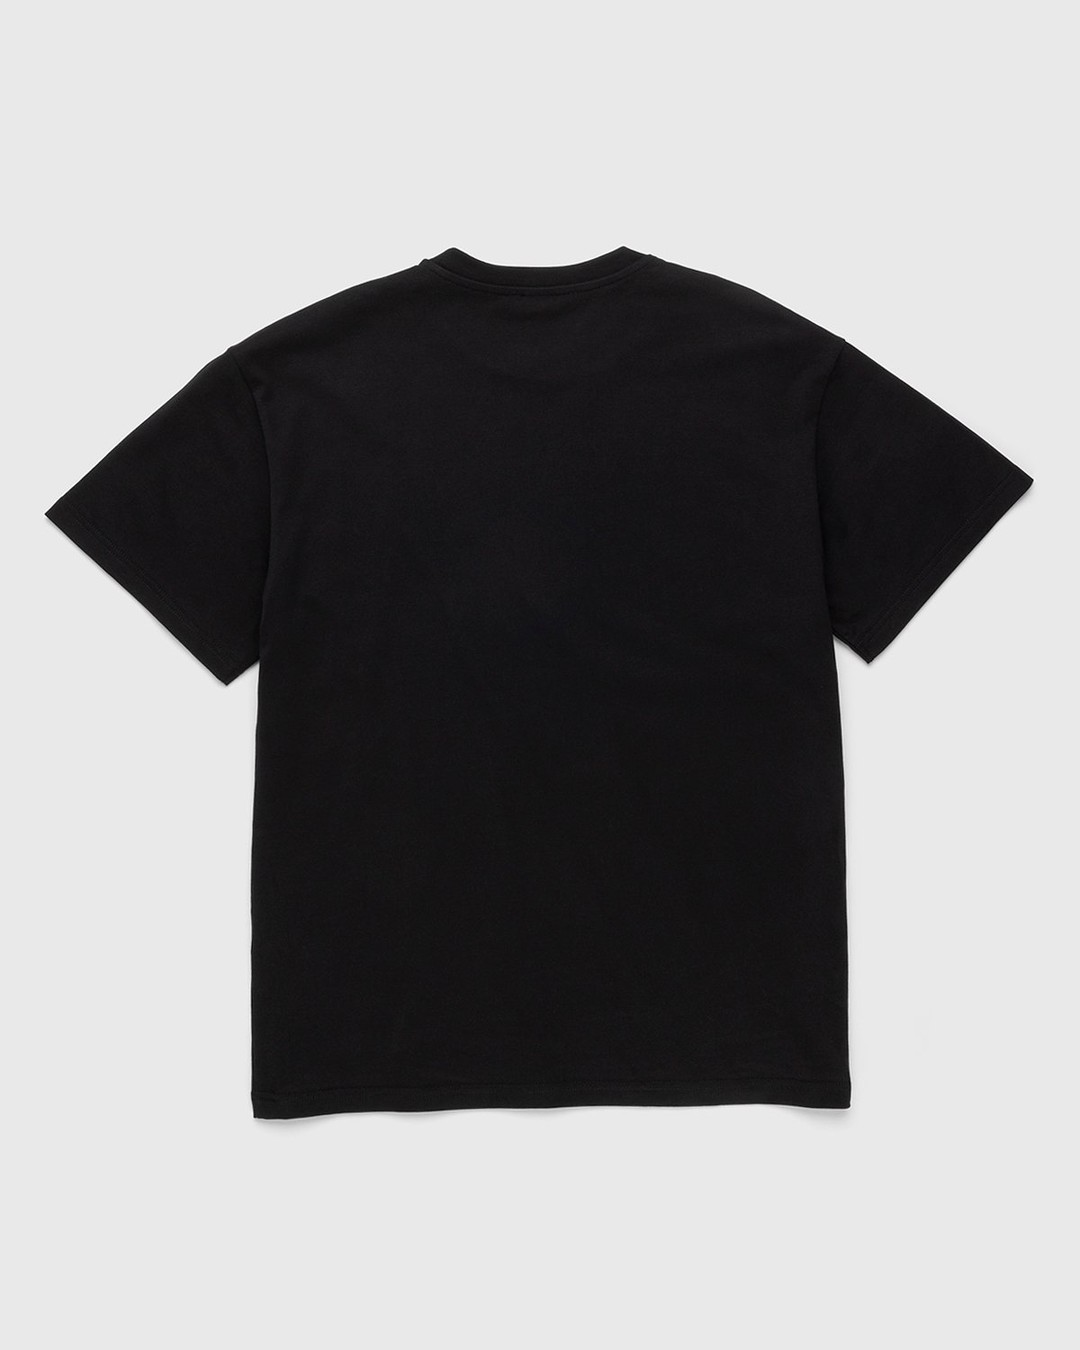 J.W. Anderson – Embroidered Strawberry JWA T-Shirt Black - T-shirts - Black - Image 2